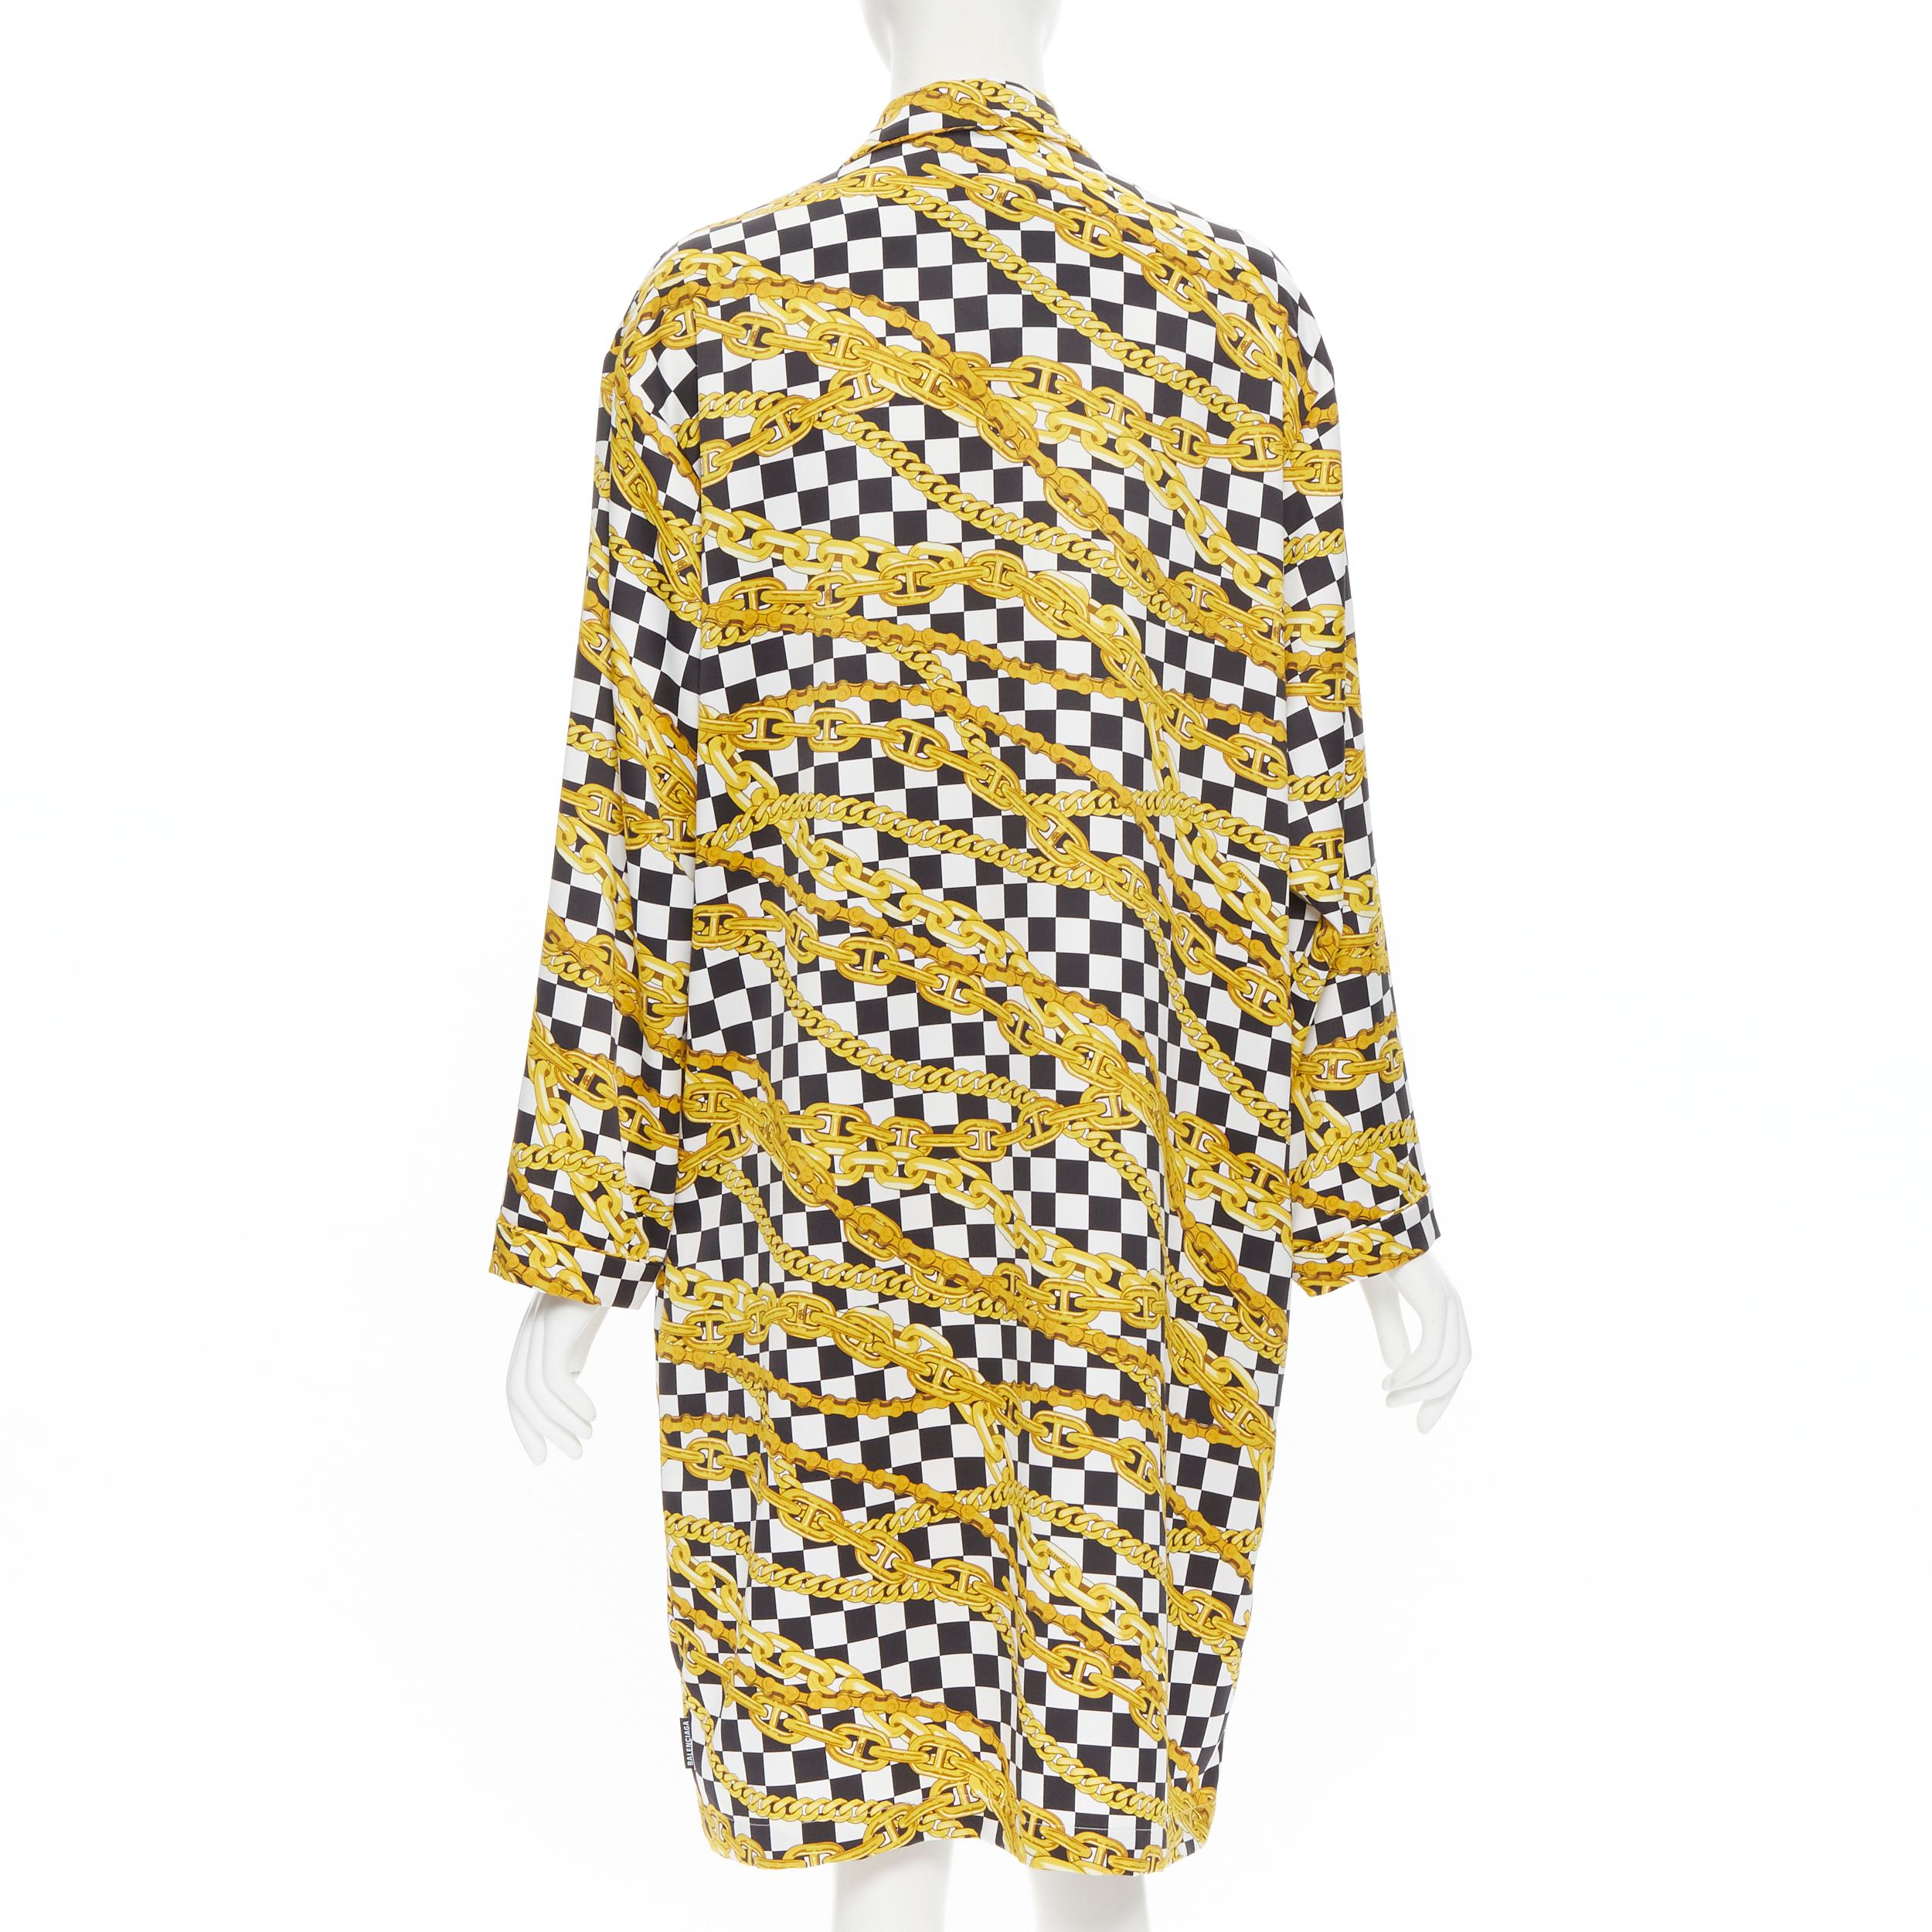 Beige new BALENCIAGA gold vintage chain black white checker shirt dress robe FR38